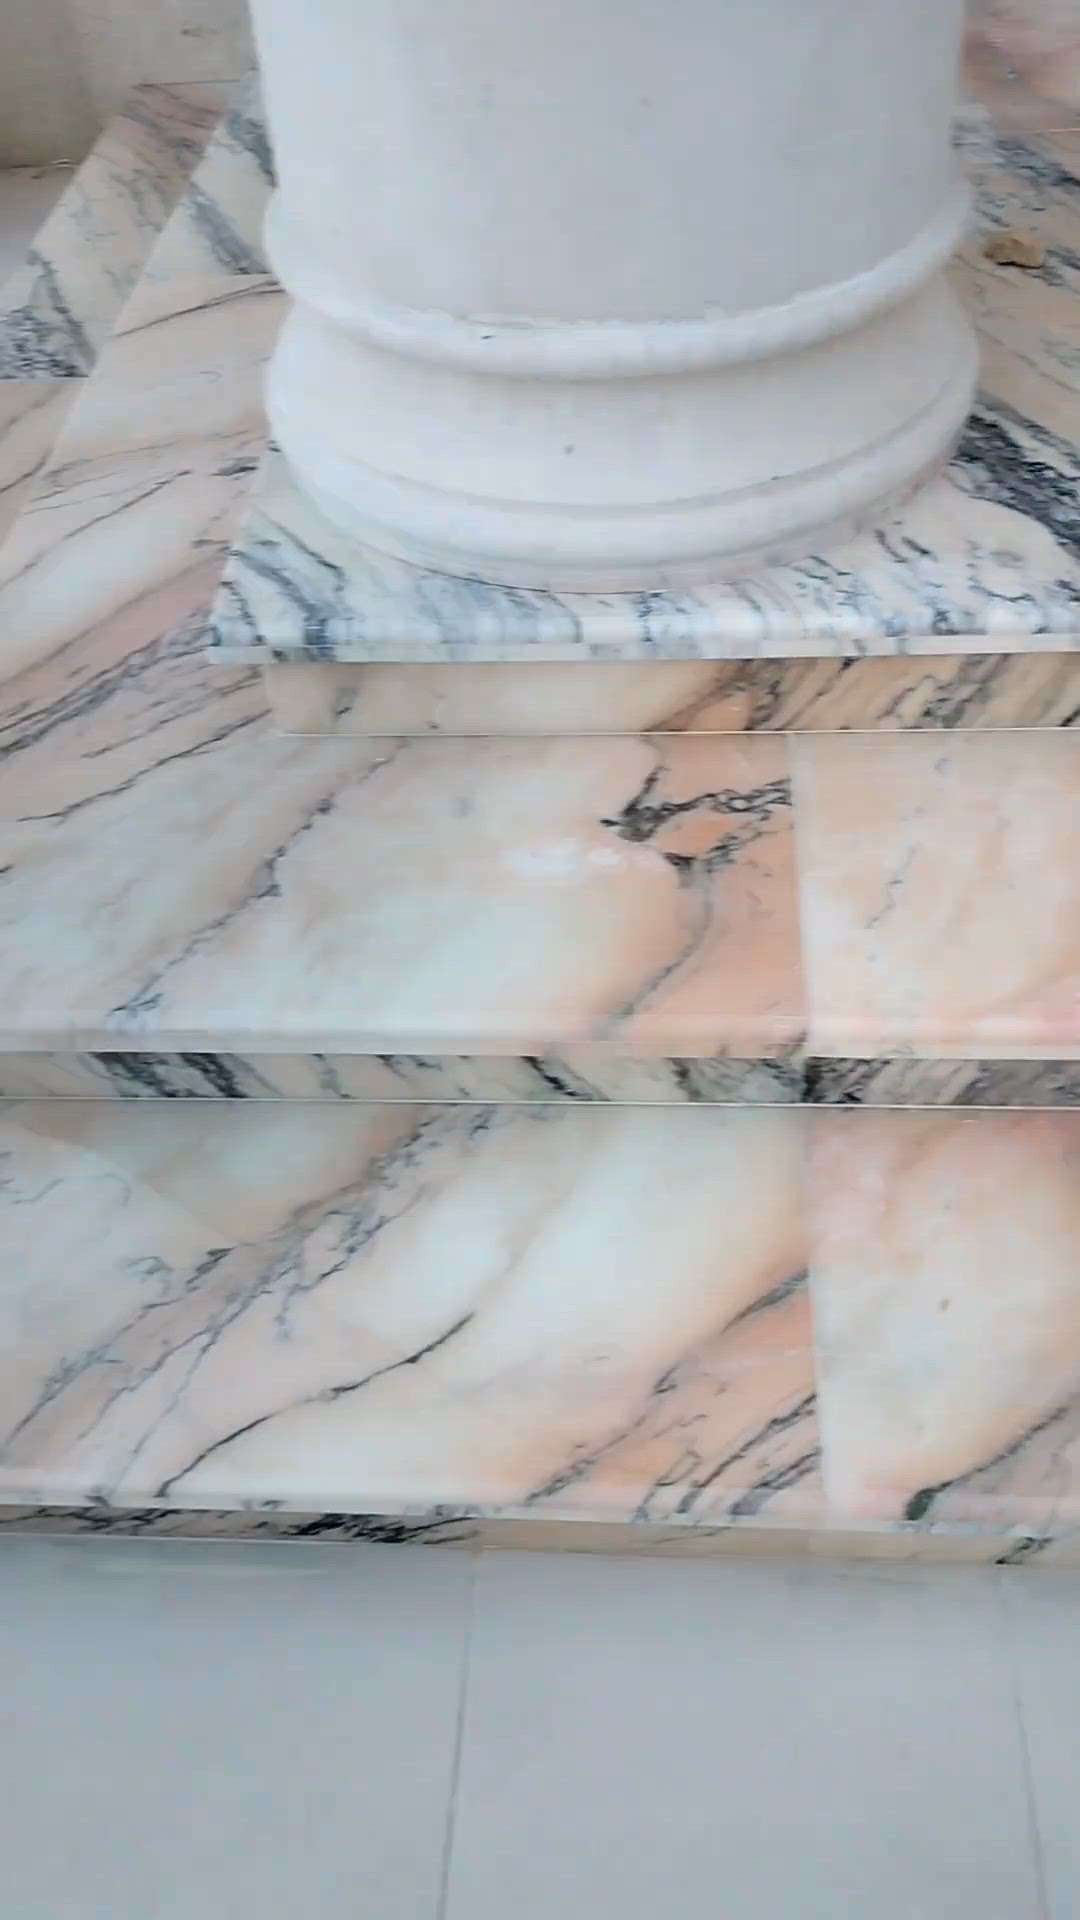 #MarbleFlooring  #marblestaircase  #jaipur  #jaipurfashion  #GraniteFloors